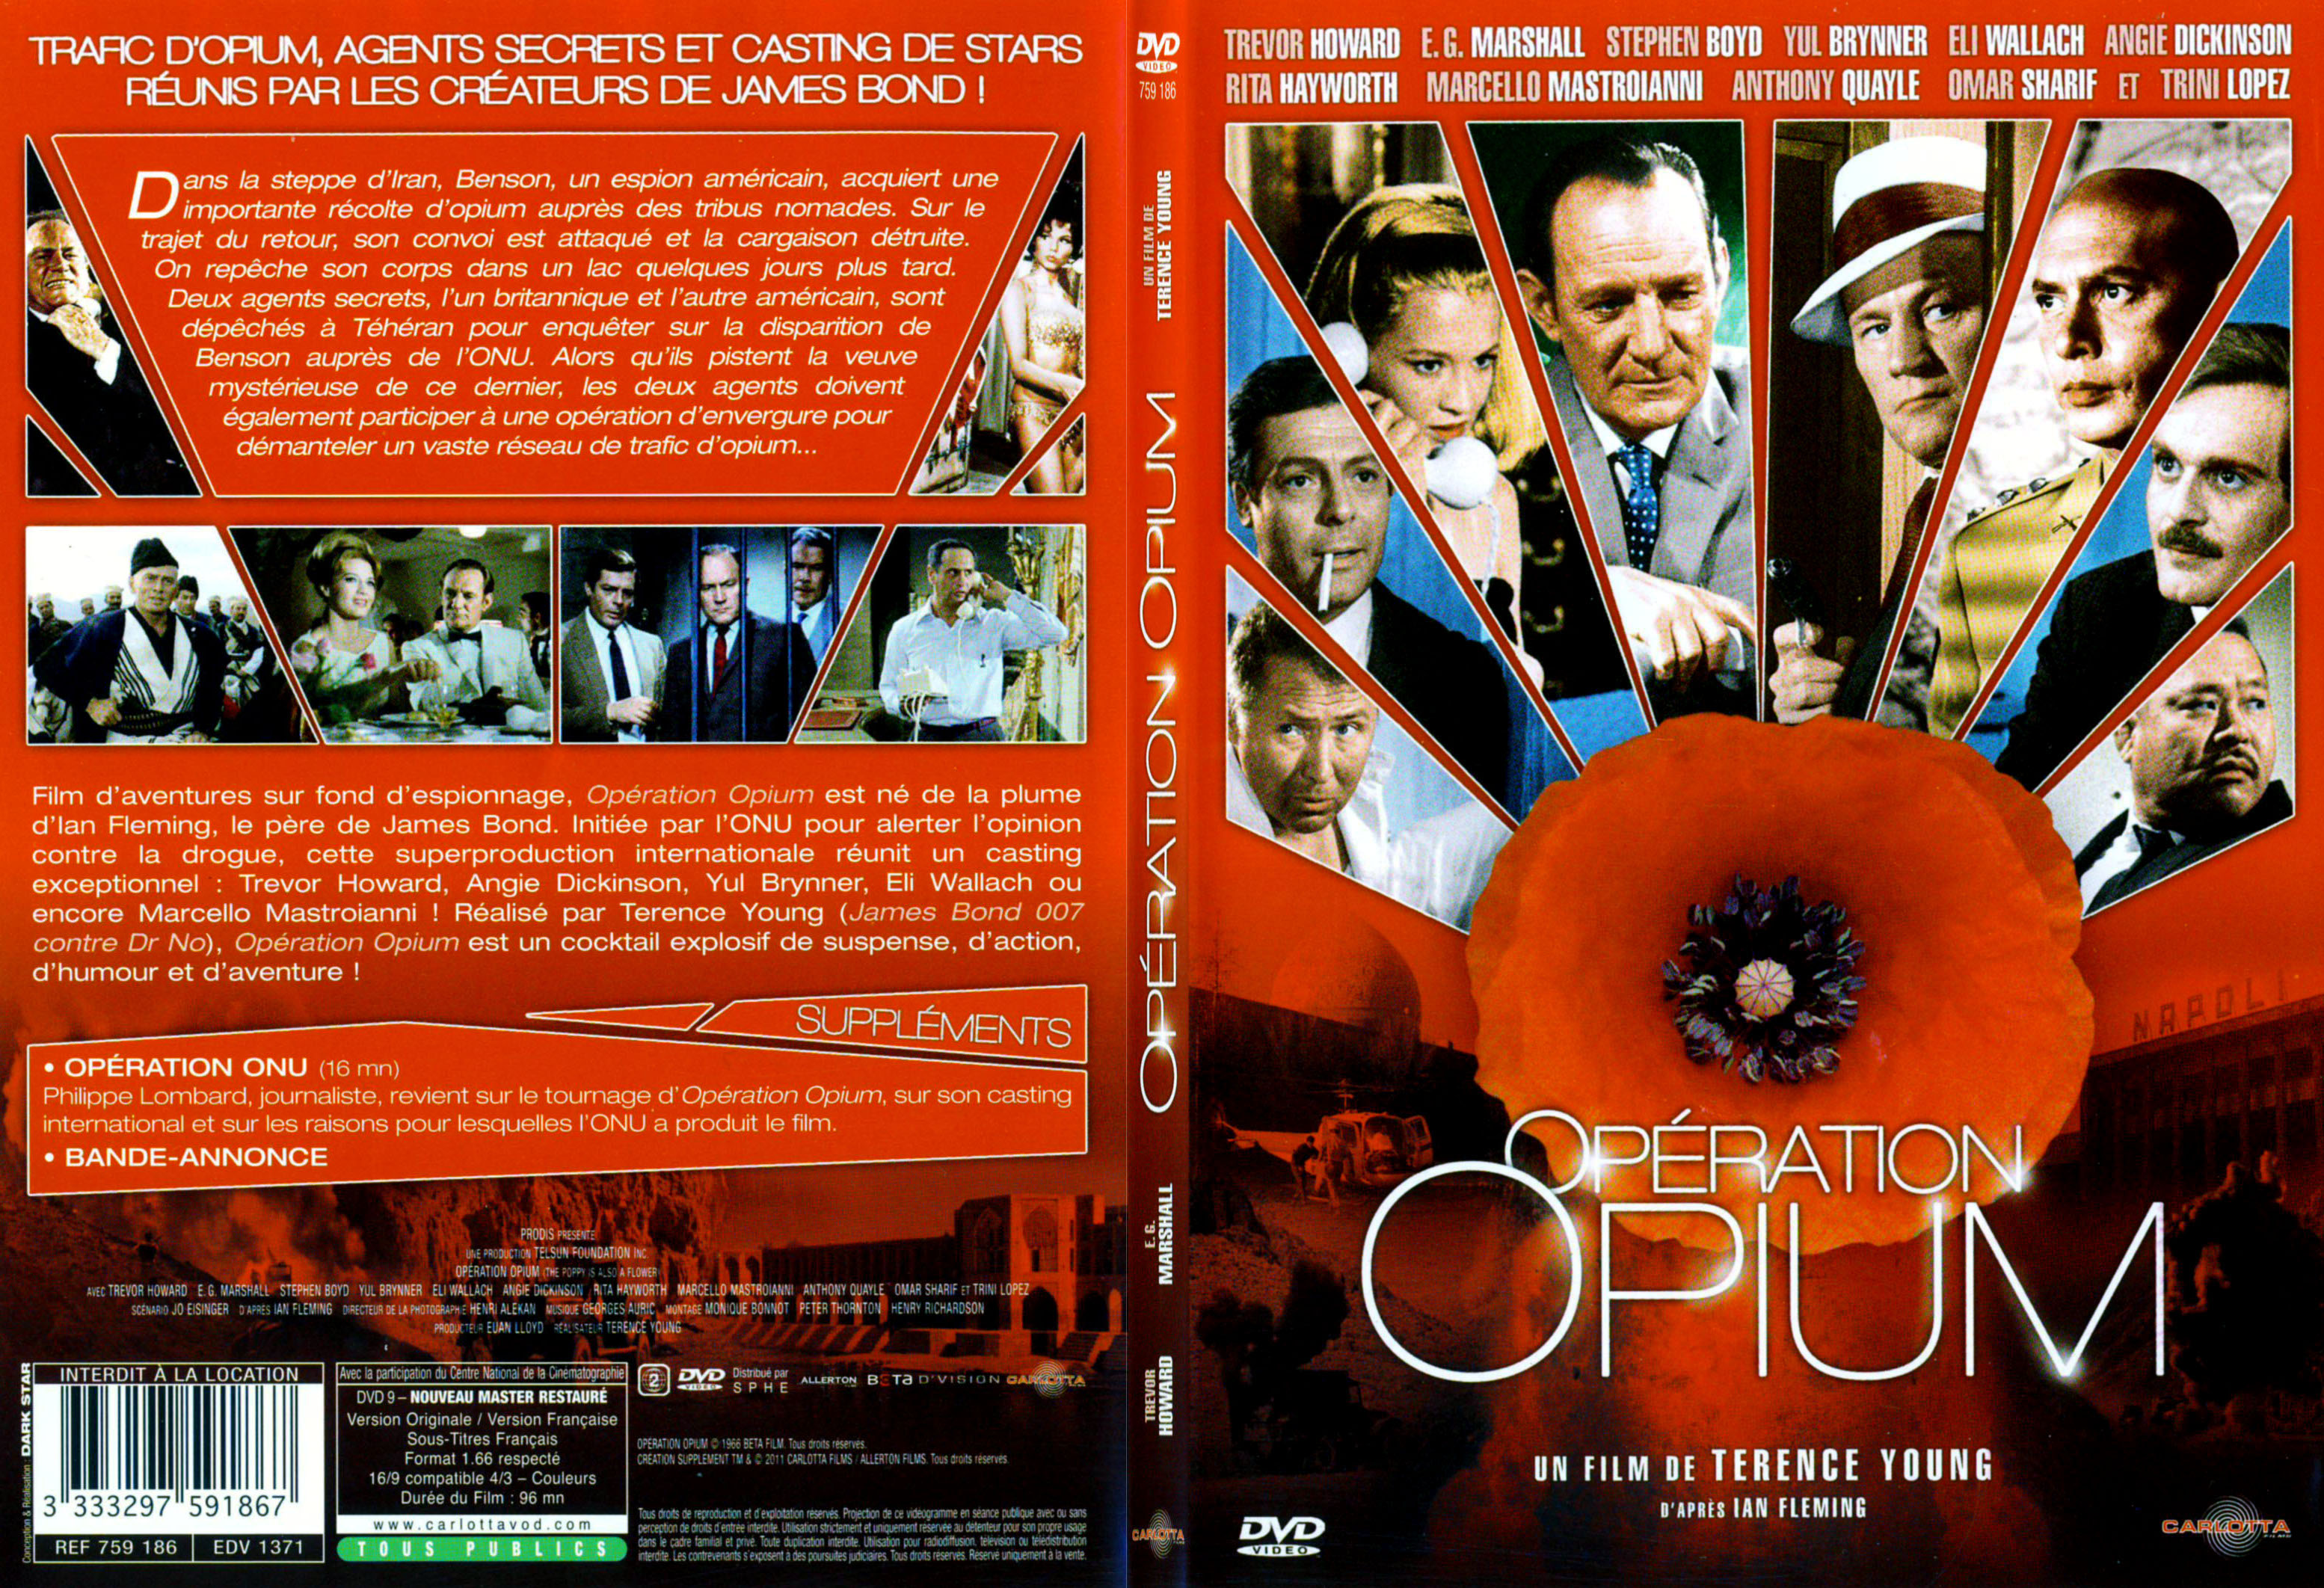 Jaquette DVD Operation opium - SLIM v2